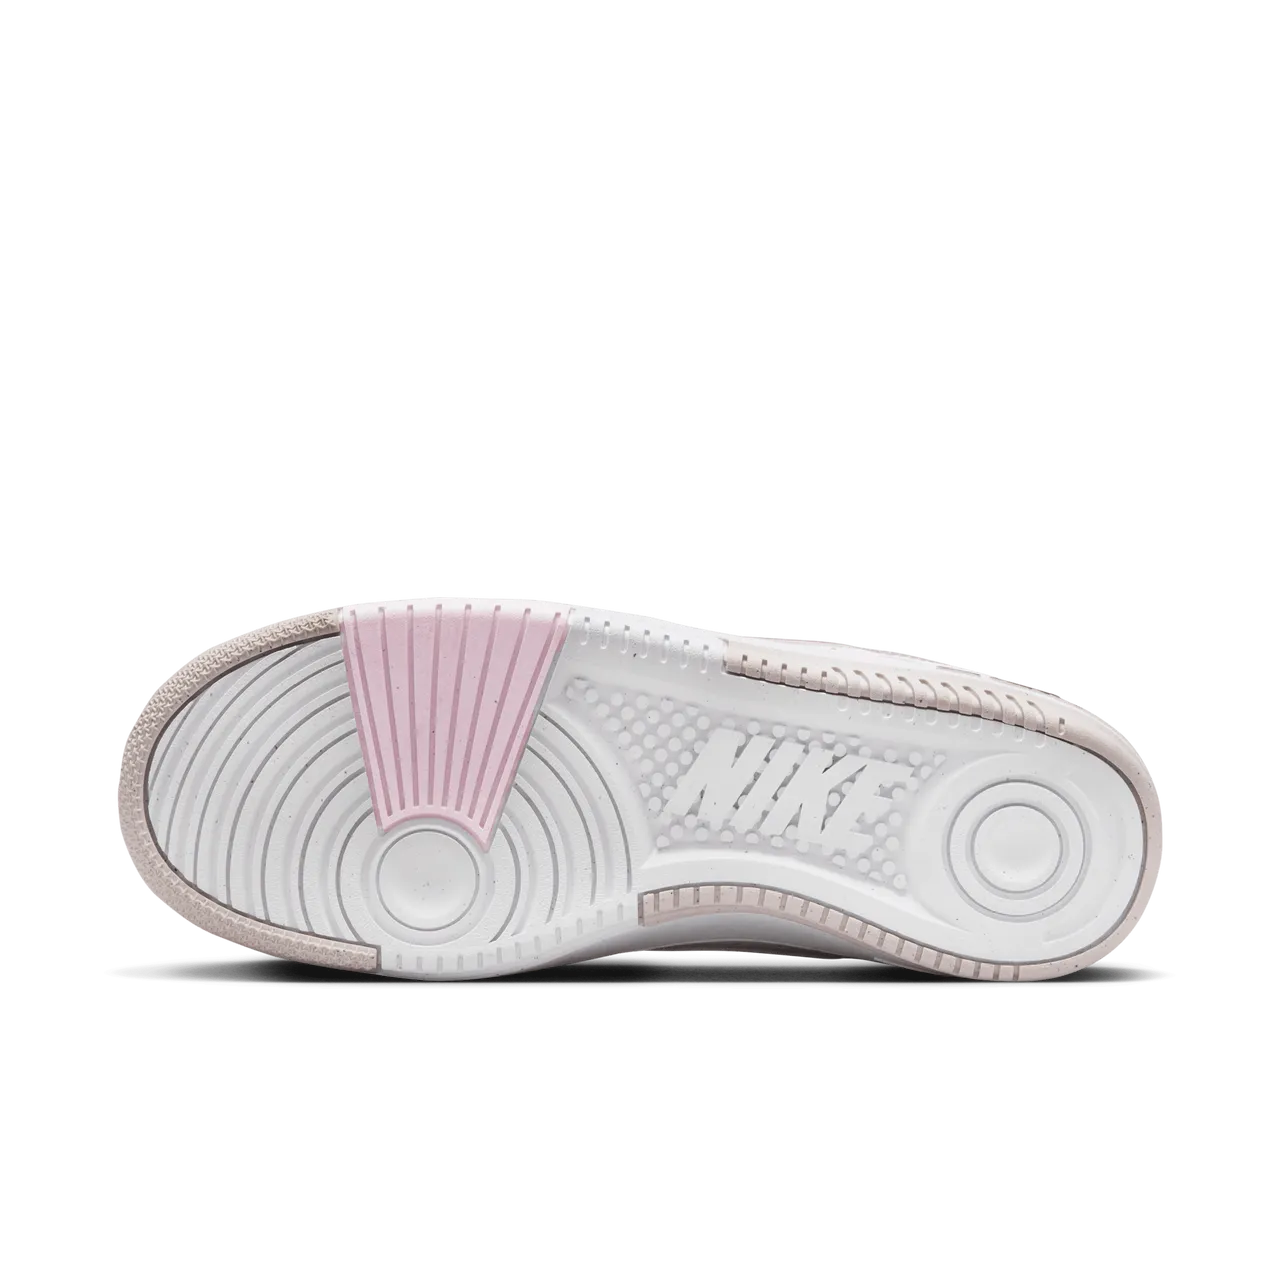 Nike Gamma Force Women's Shoes - White